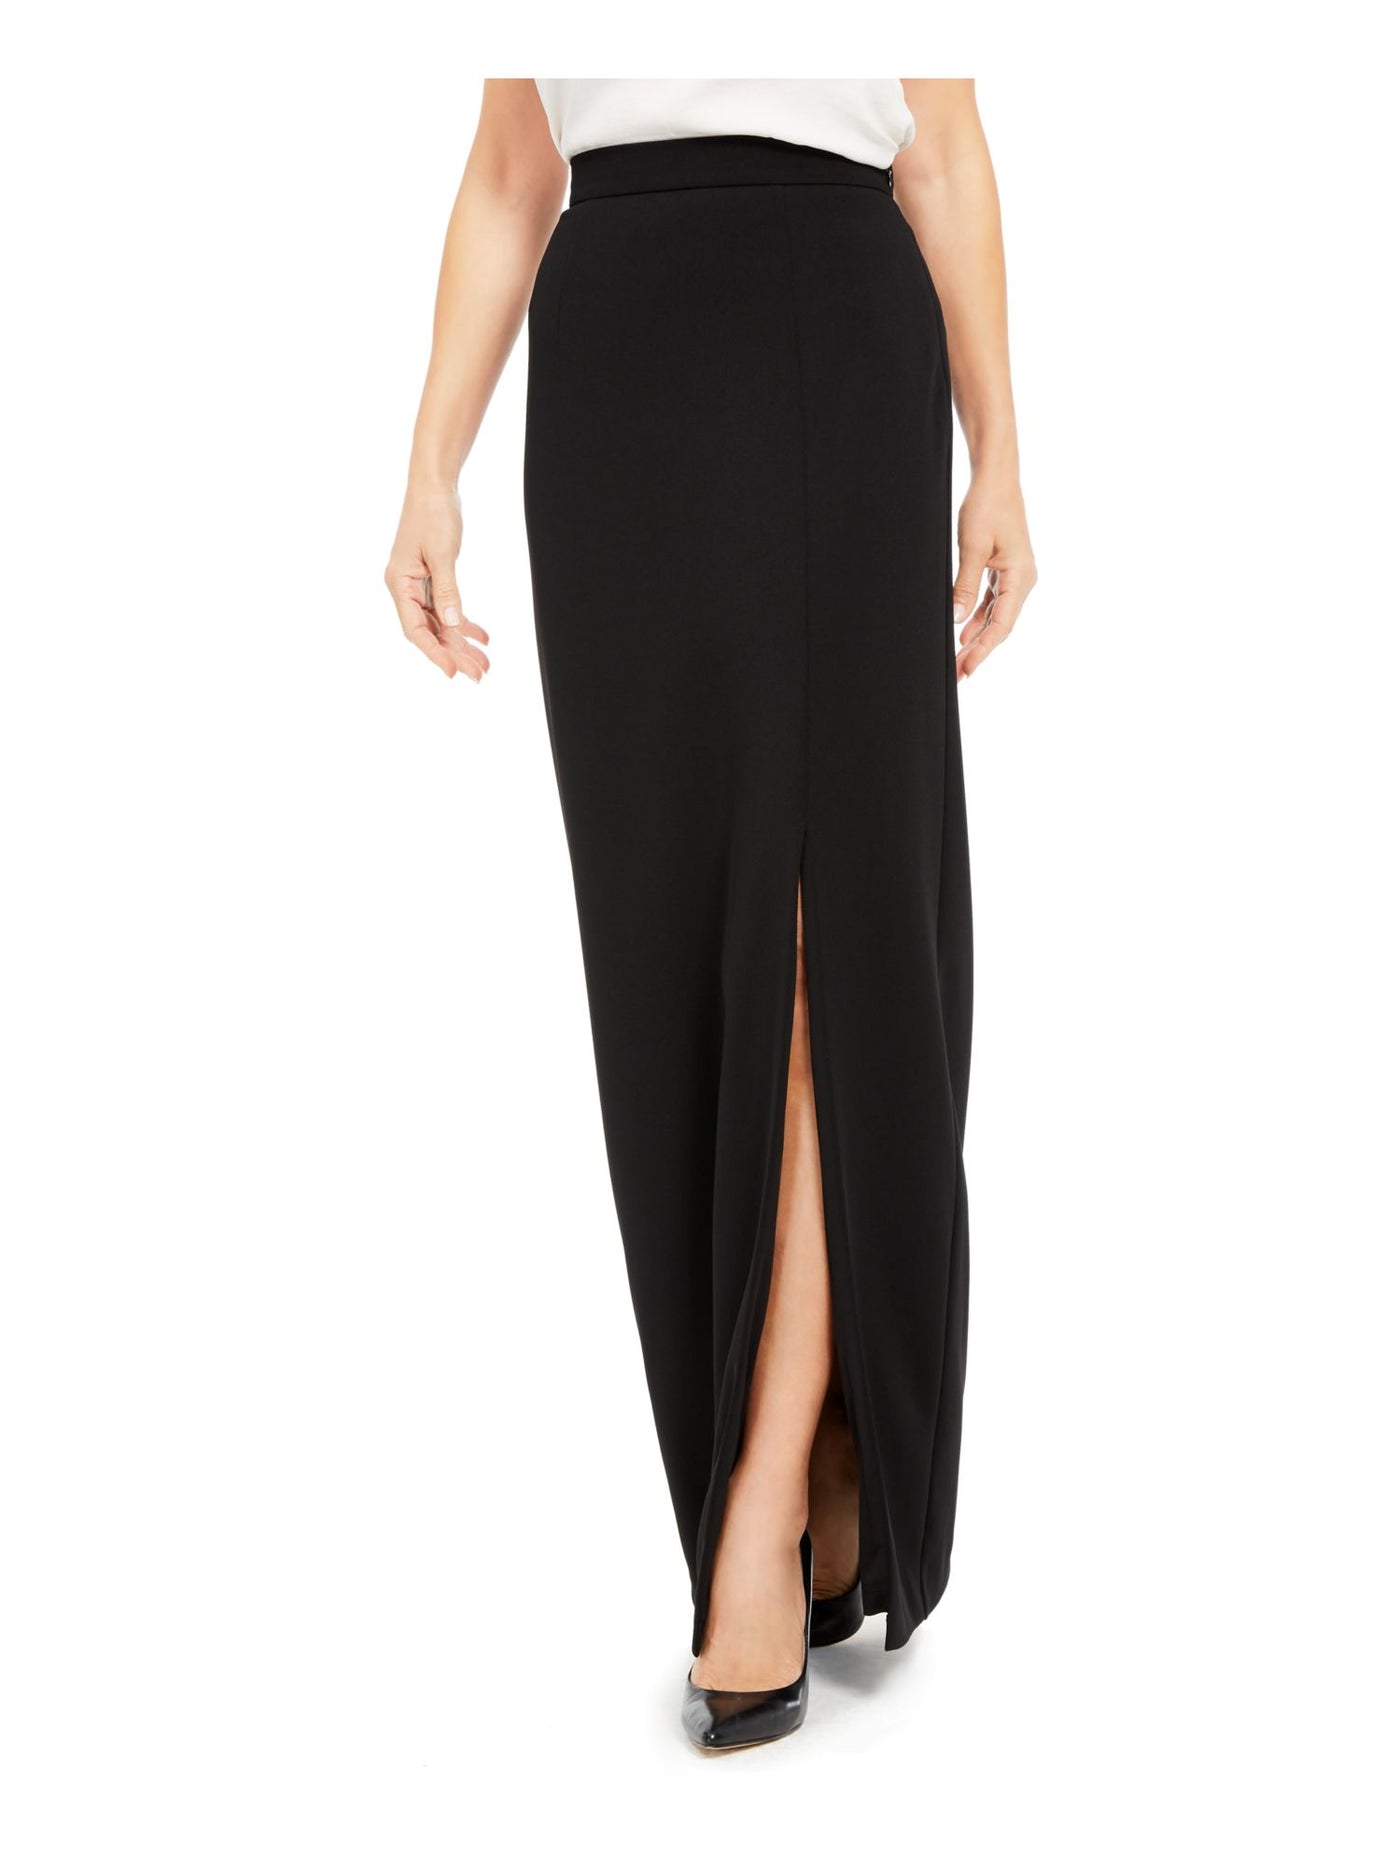 ADRIANNA PAPELL Womens Black Slitted Zippered Full-Length Evening Skirt 16